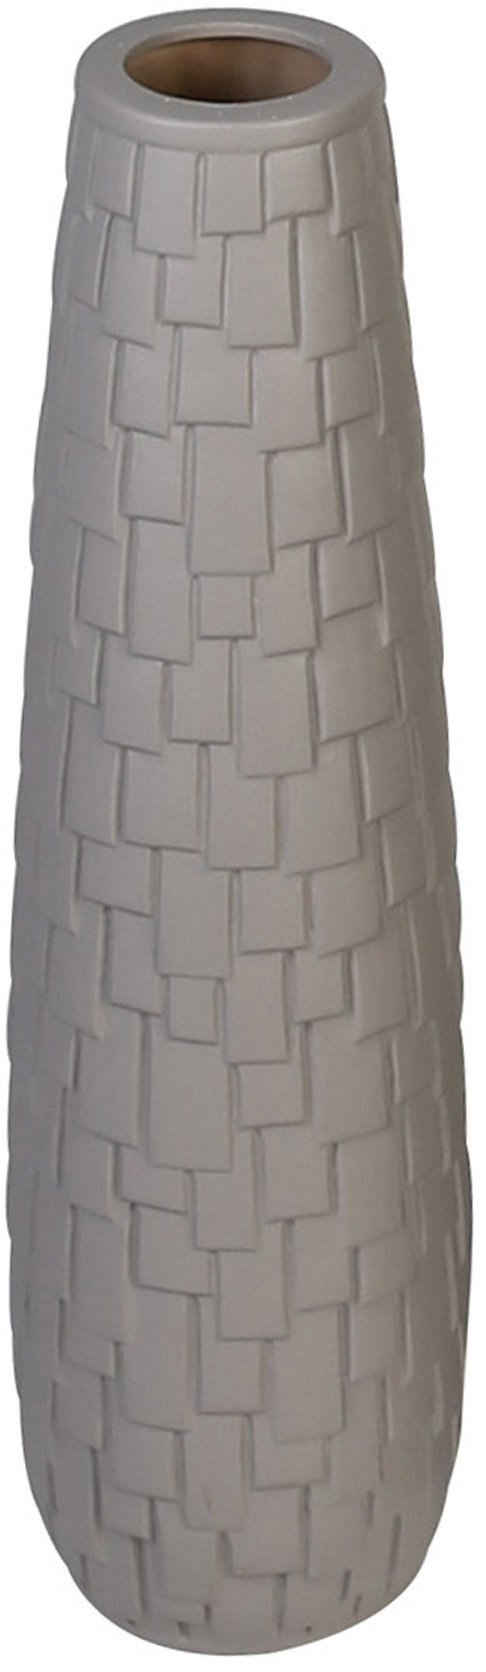 GILDE Bodenvase »Brick« (1 St), Keramik, matt, dekorative Riemchen-Struktur, 57 cm hoch